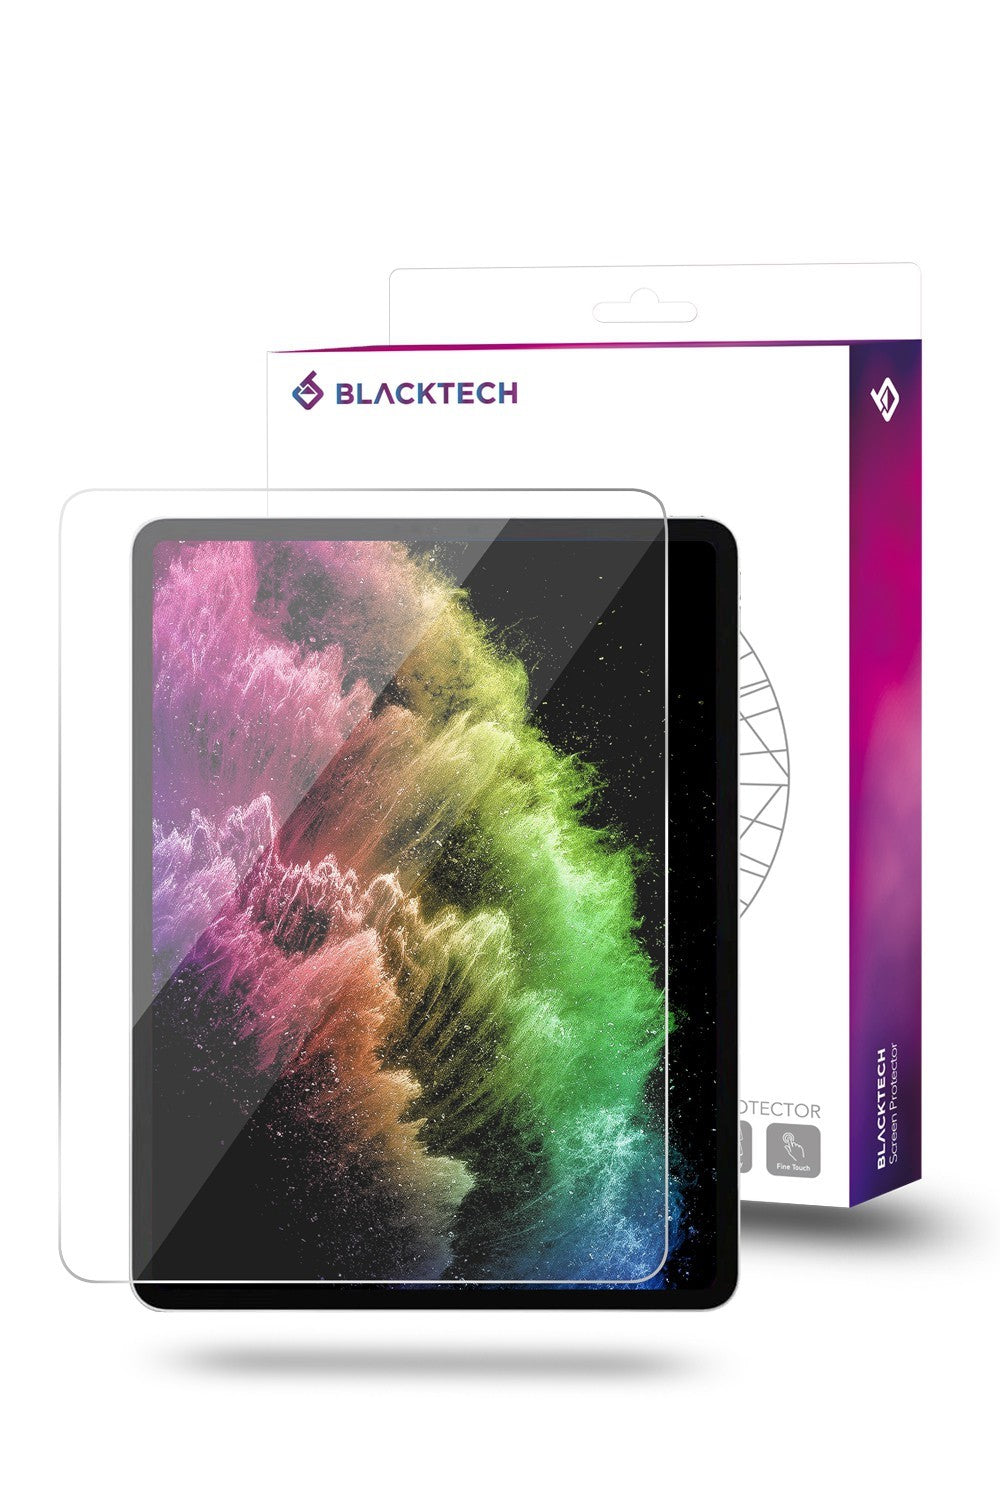 Blacktech iPad Air 4/5 Gen Tempered Glass Screen Protector